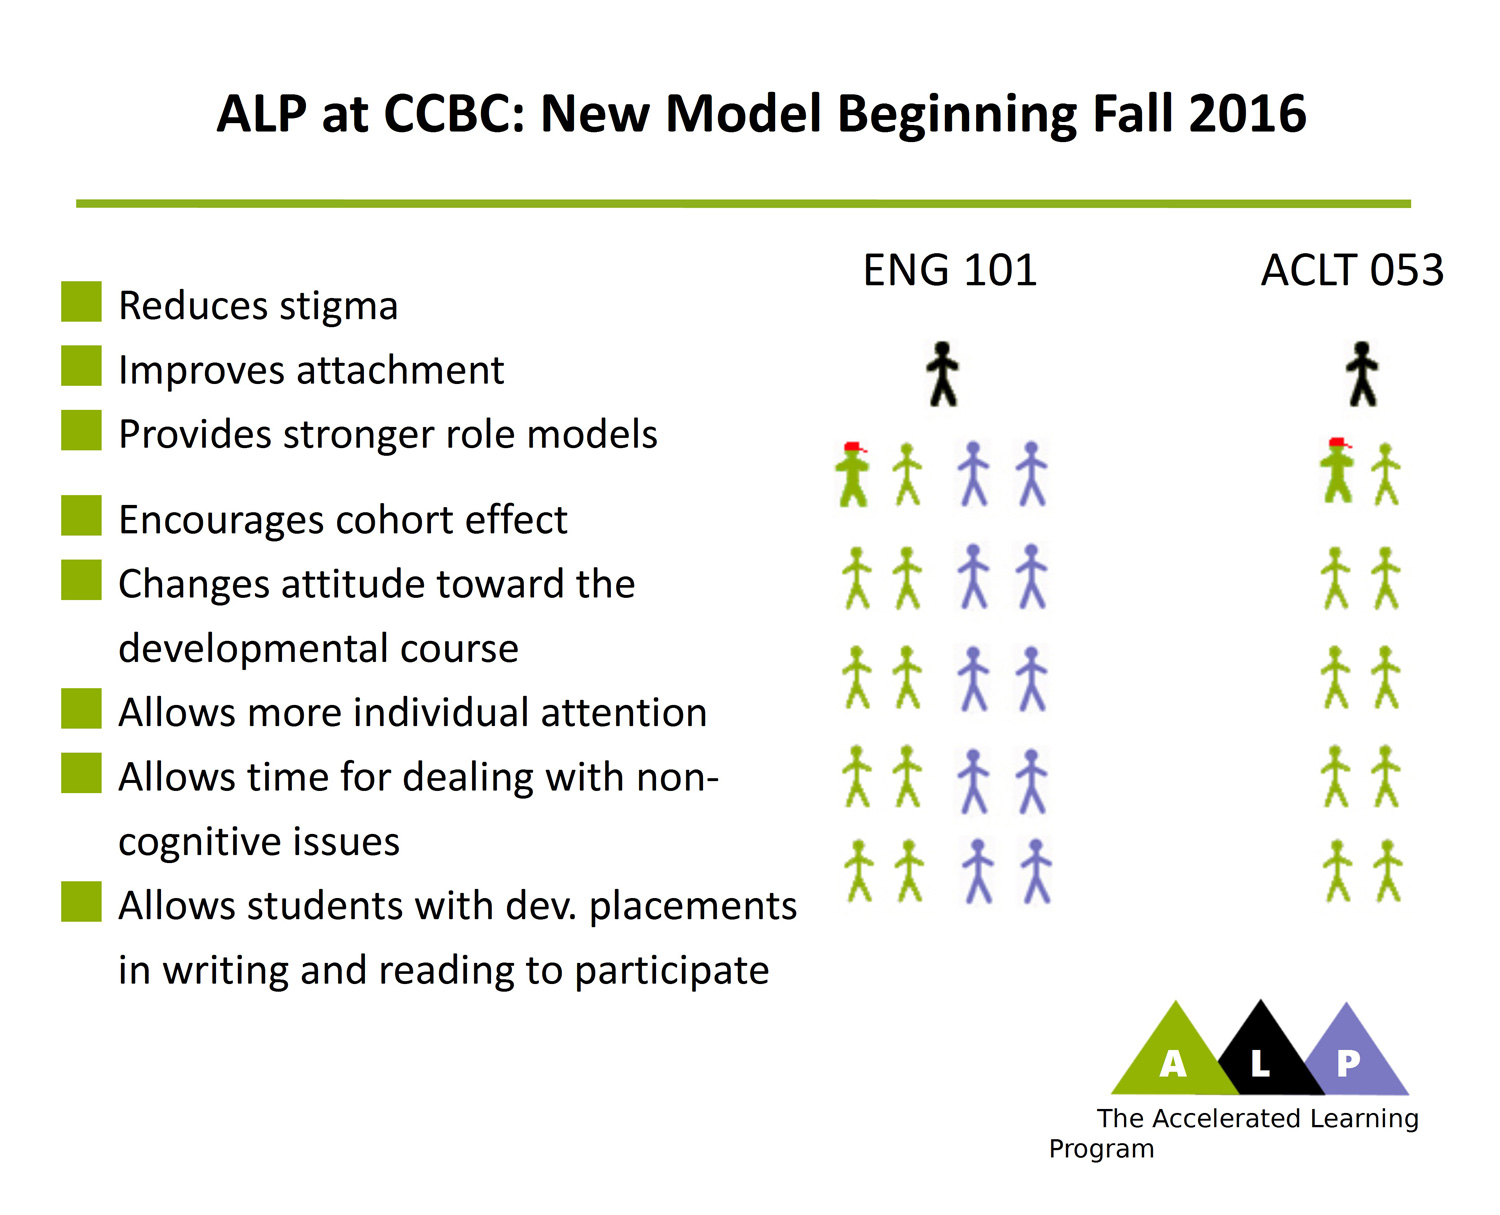 Important Change in the ALP Model